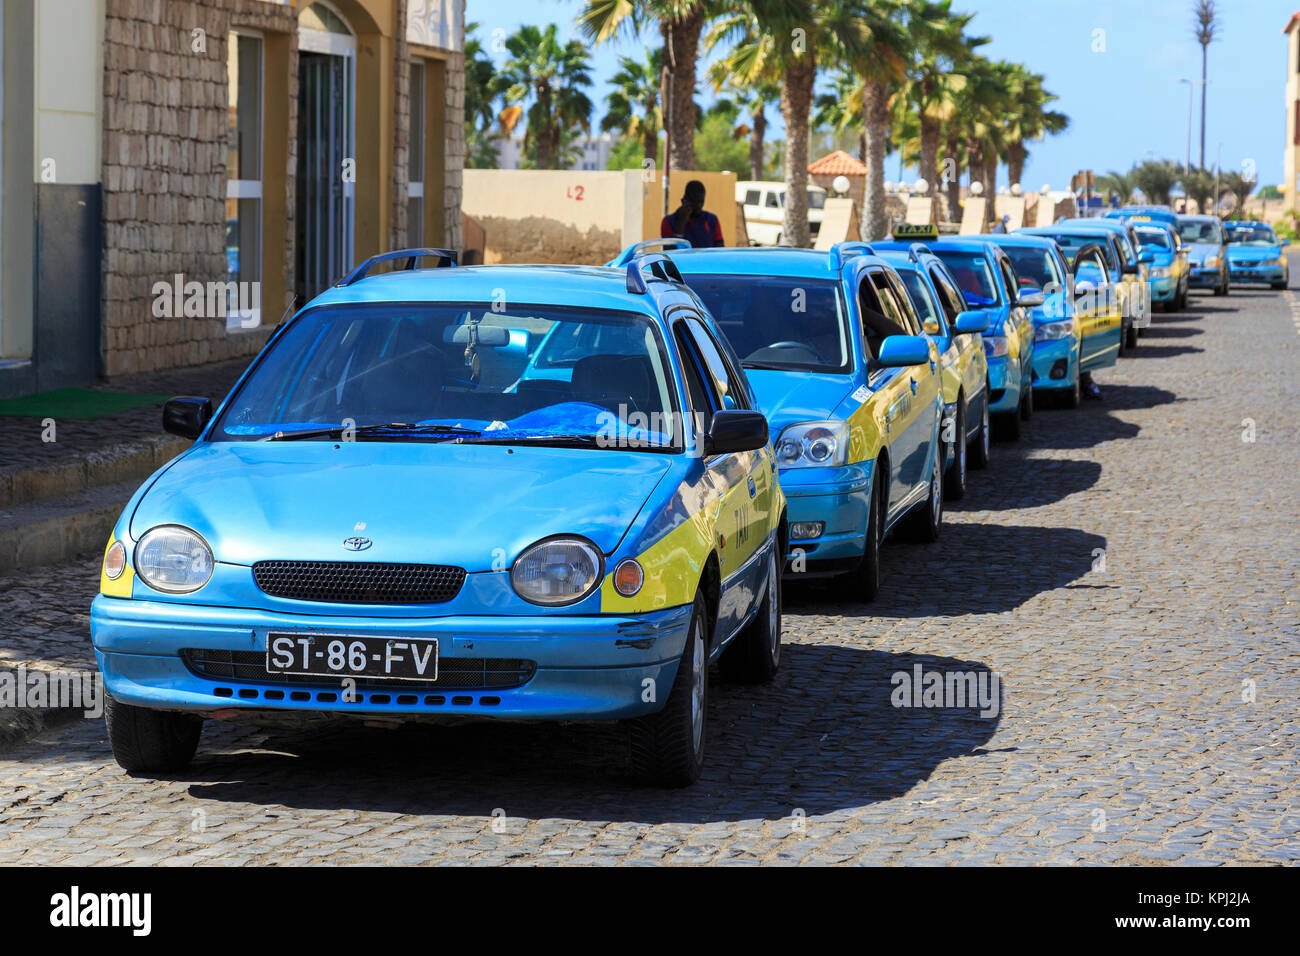 Taxi in Santa Maria, Sal Island, Salina, Cape Verde, Photo - Alamy